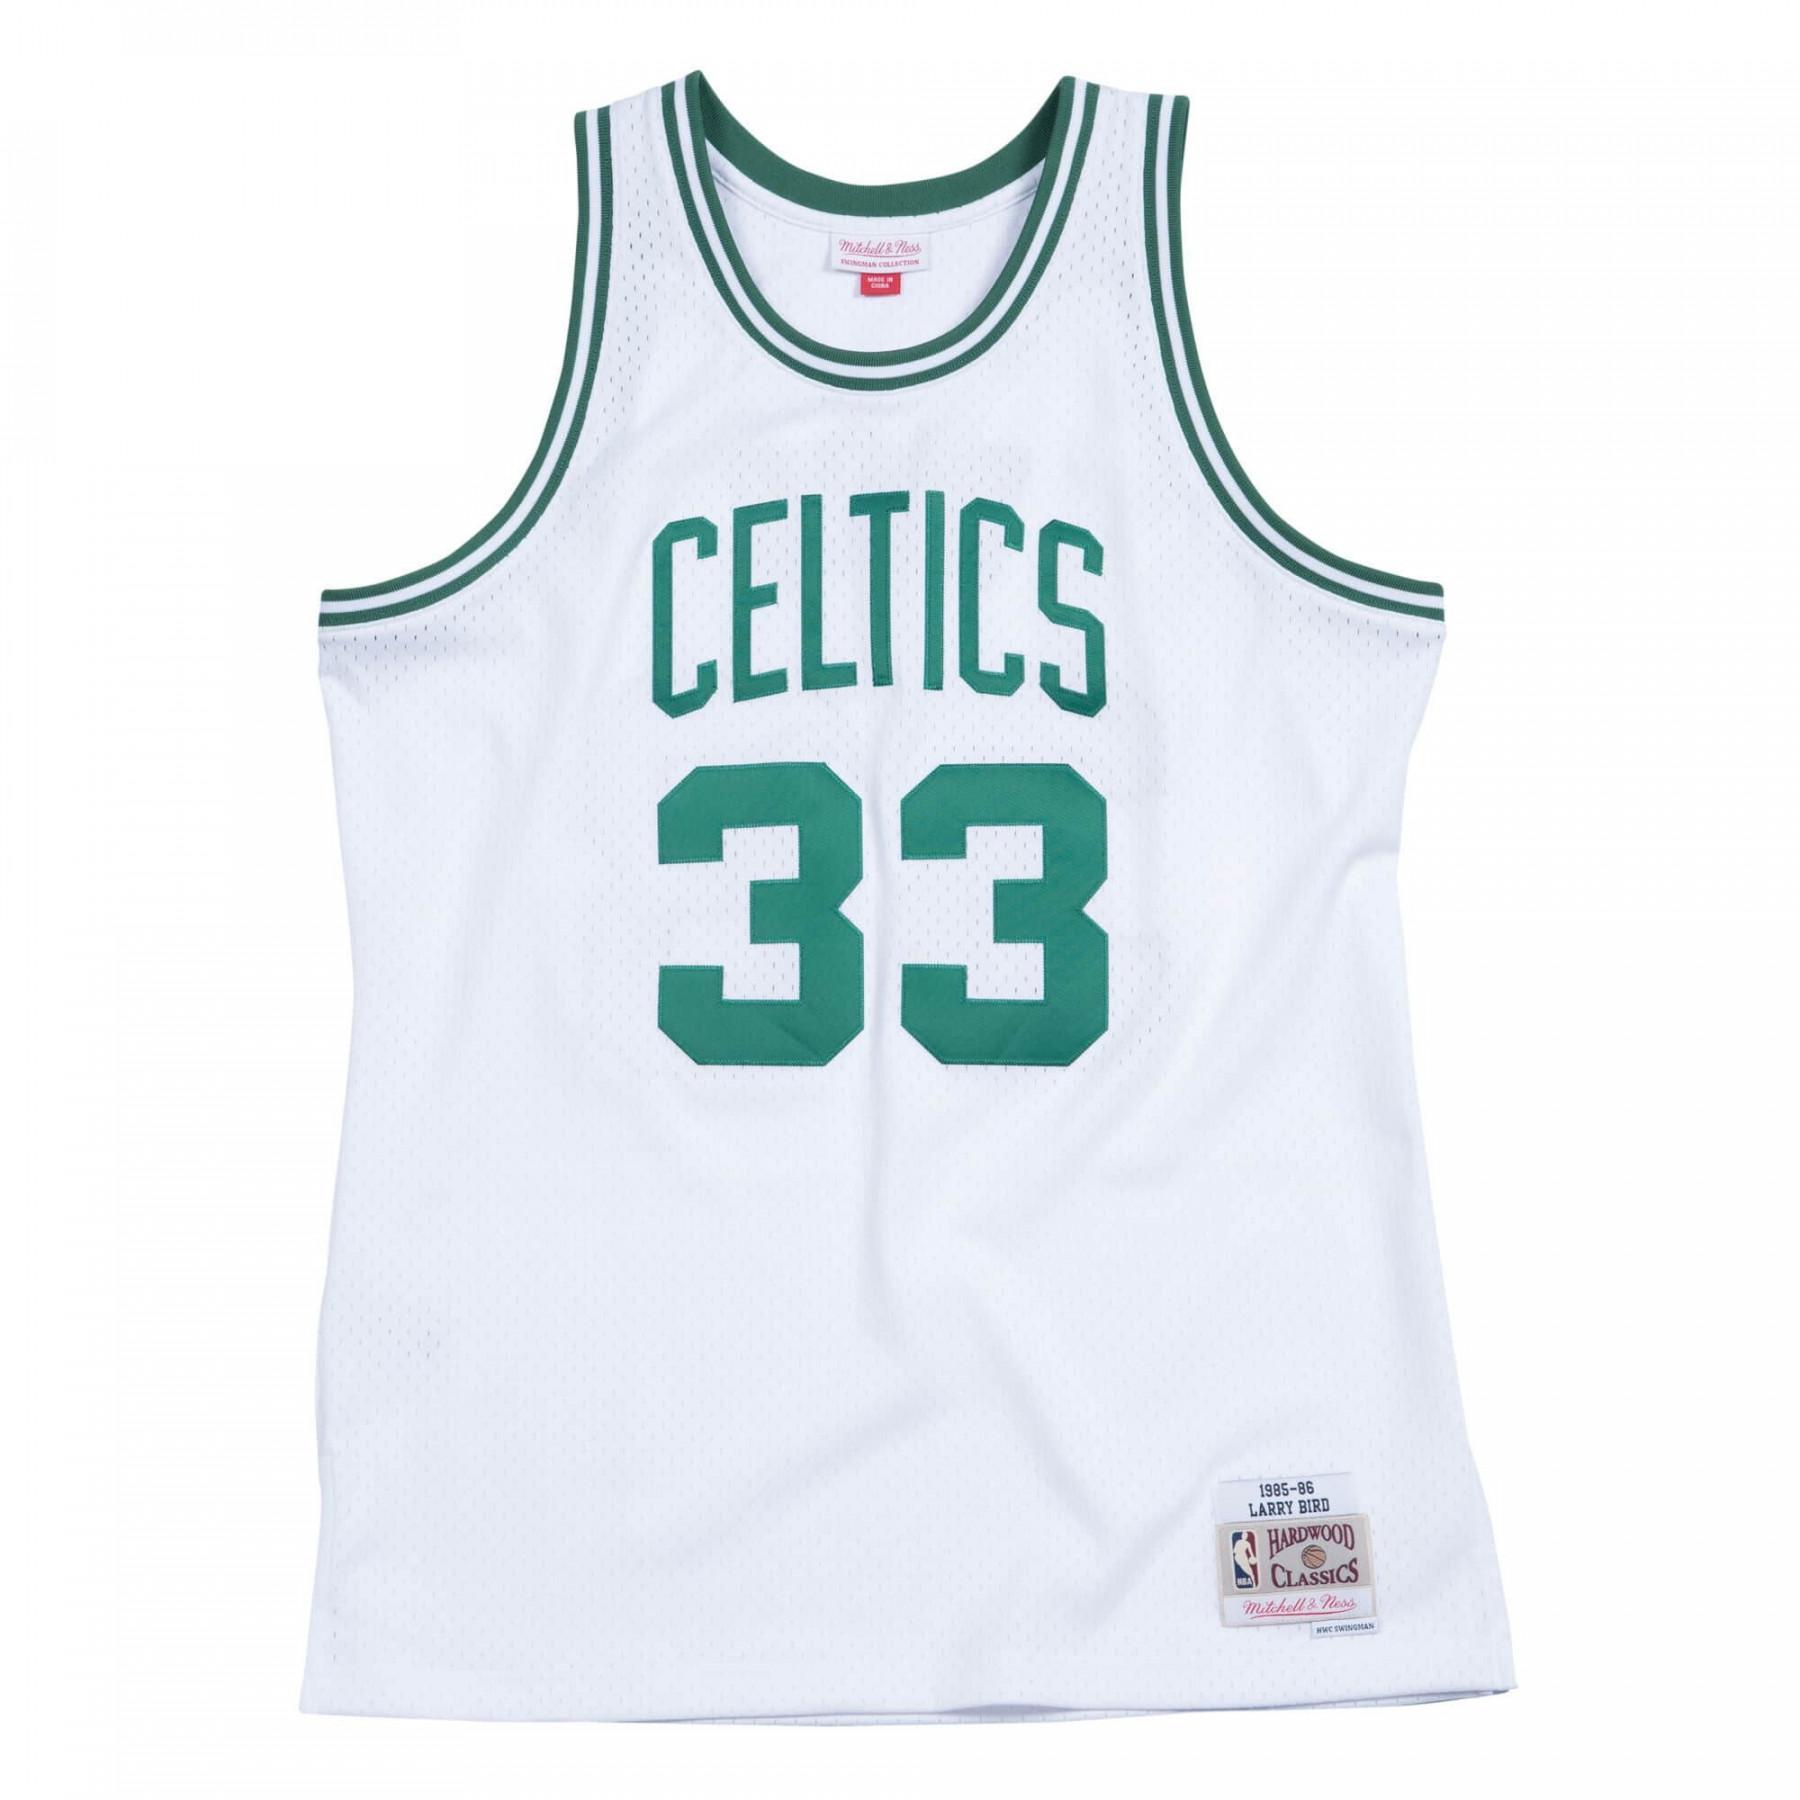 Jersey Boston Celtics NBA Swingman